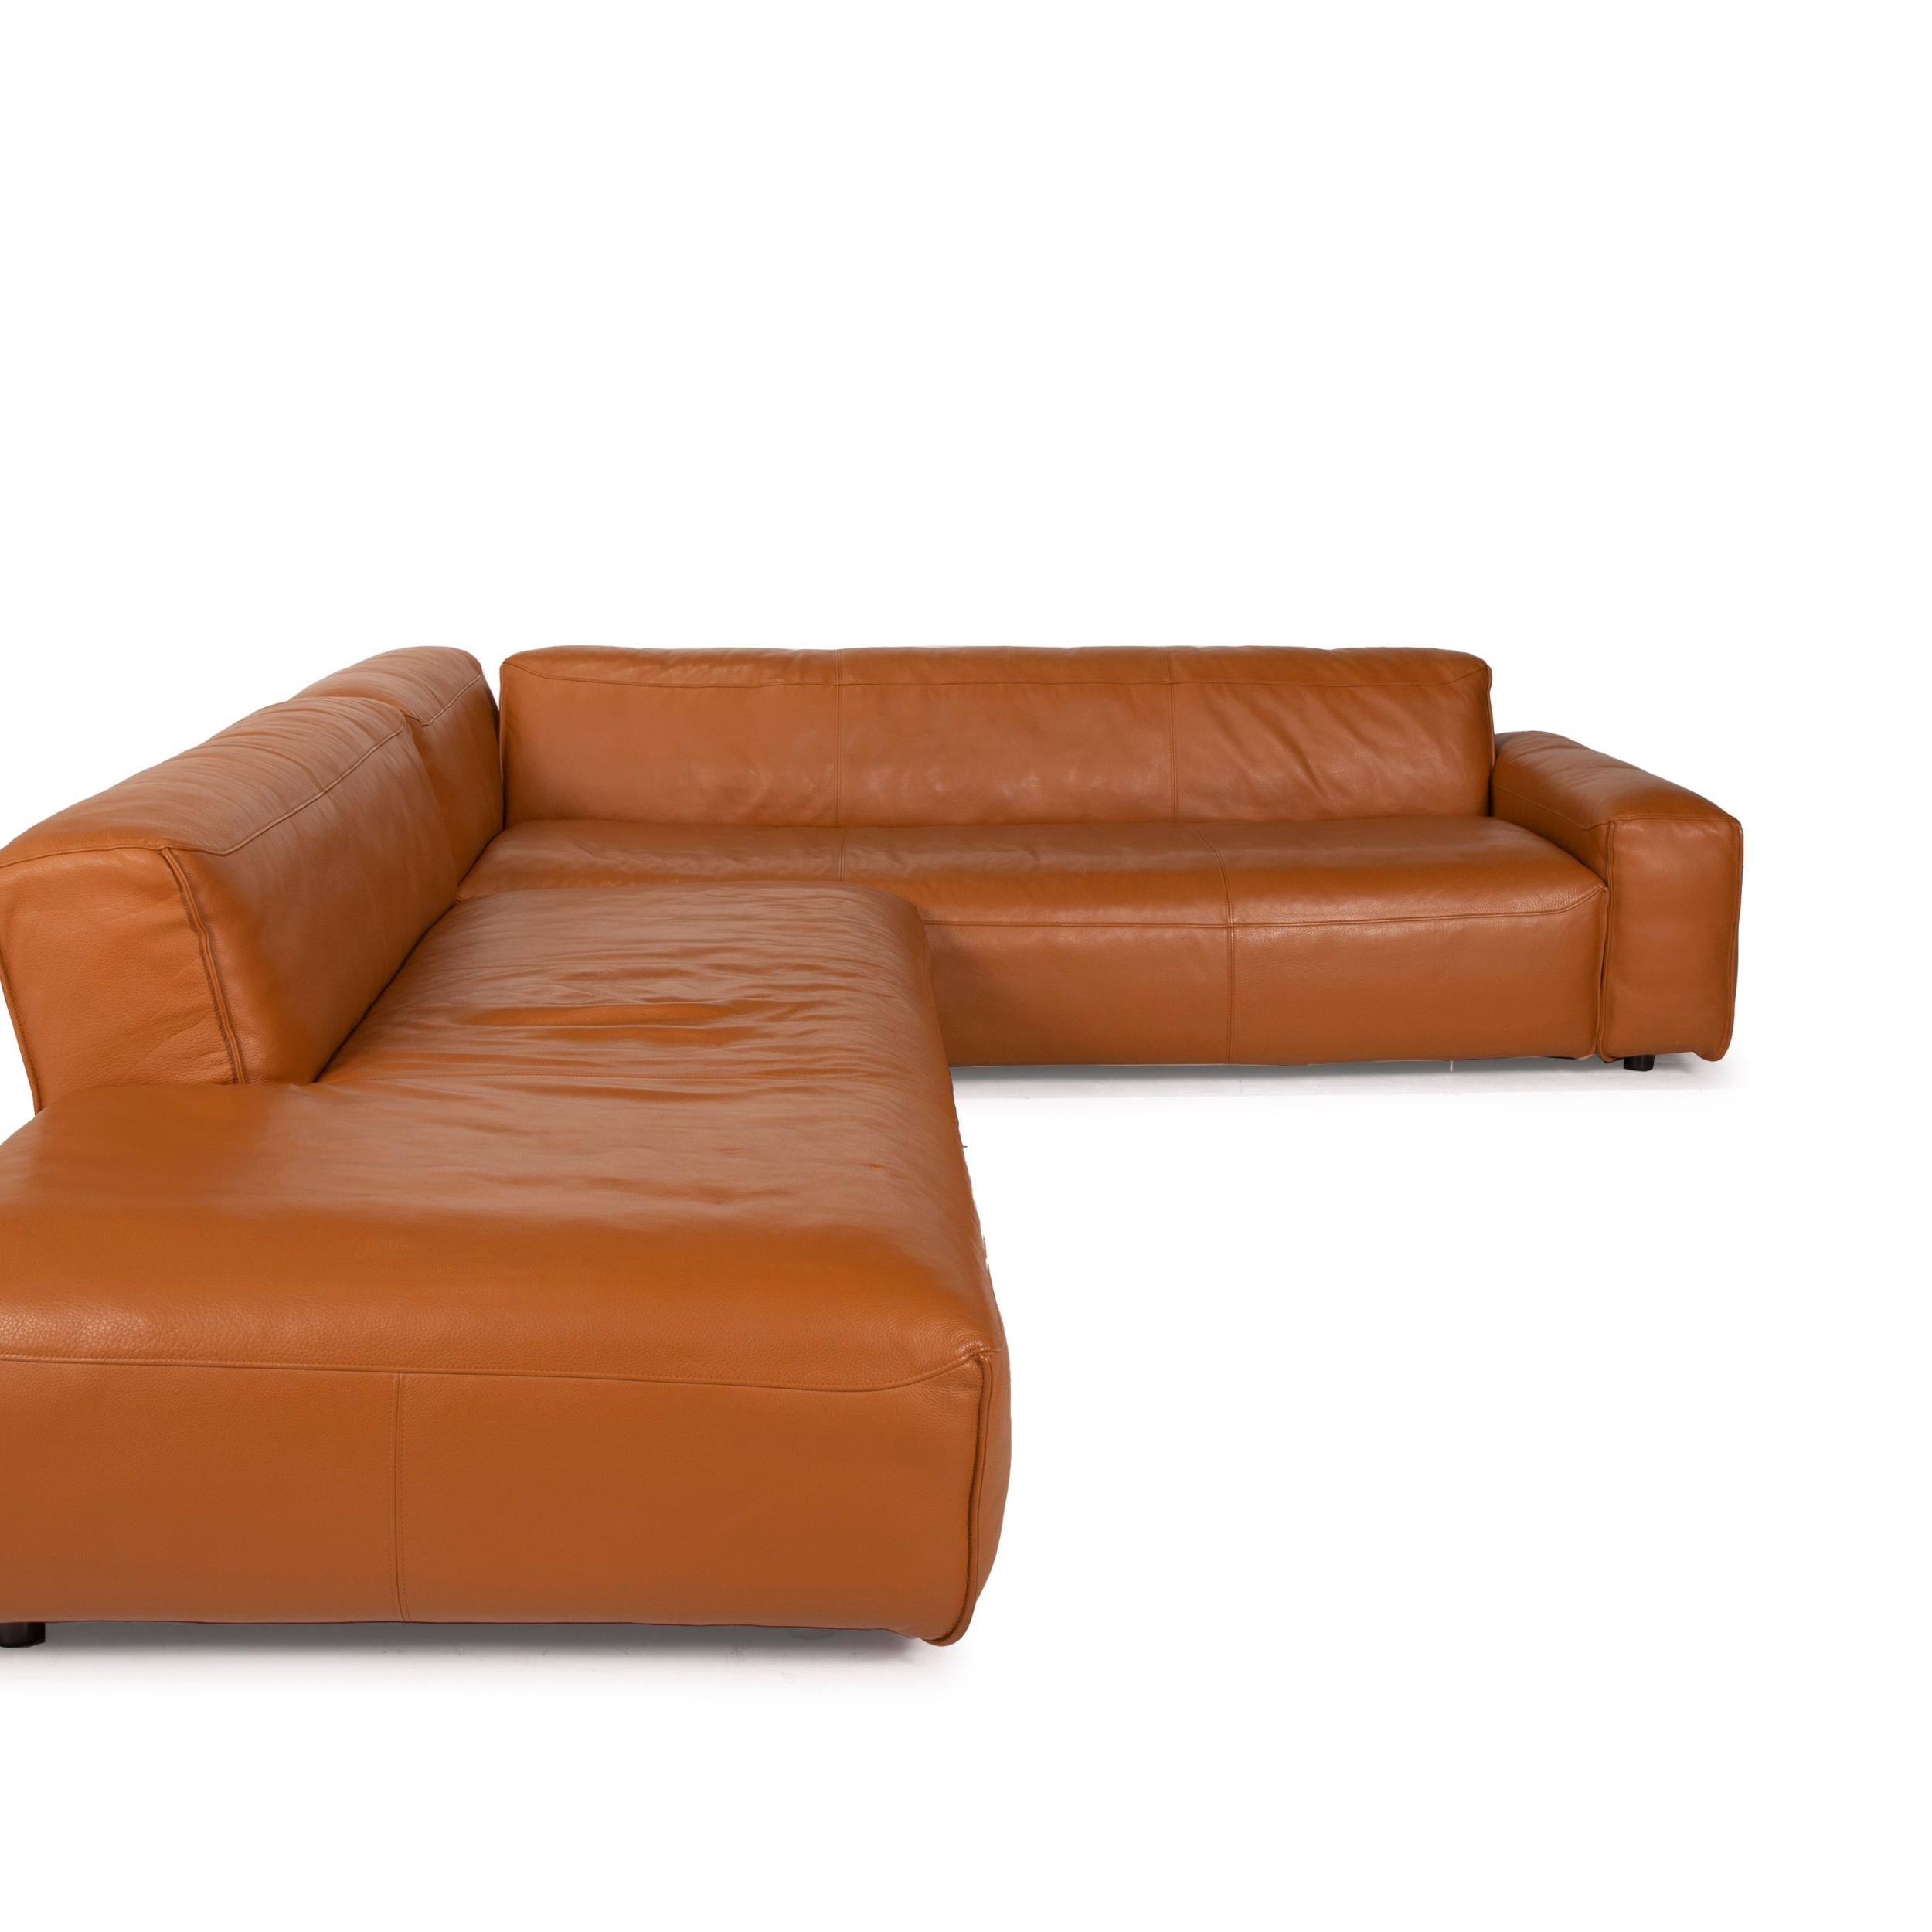 Rolf Benz Mio leather sofa cognac corner sofa For Sale 2